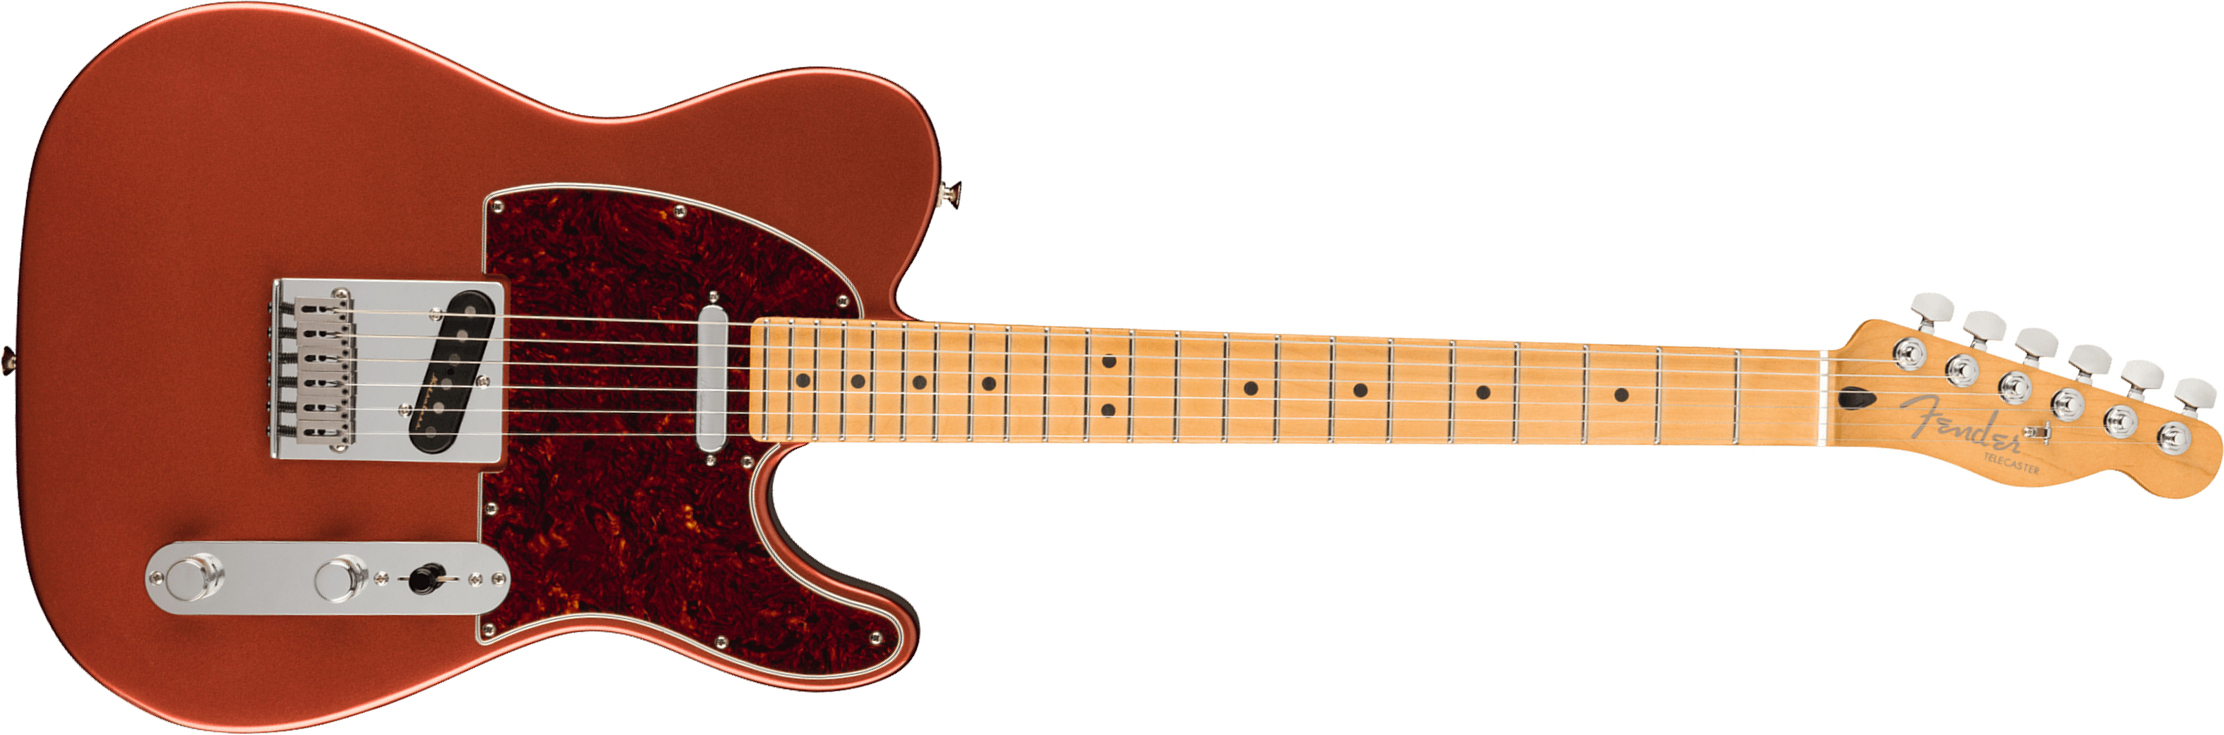 Fender Tele Player Plus Mex 2s Ht Mn - Aged Candy Apple Red - Guitarra eléctrica con forma de tel - Main picture